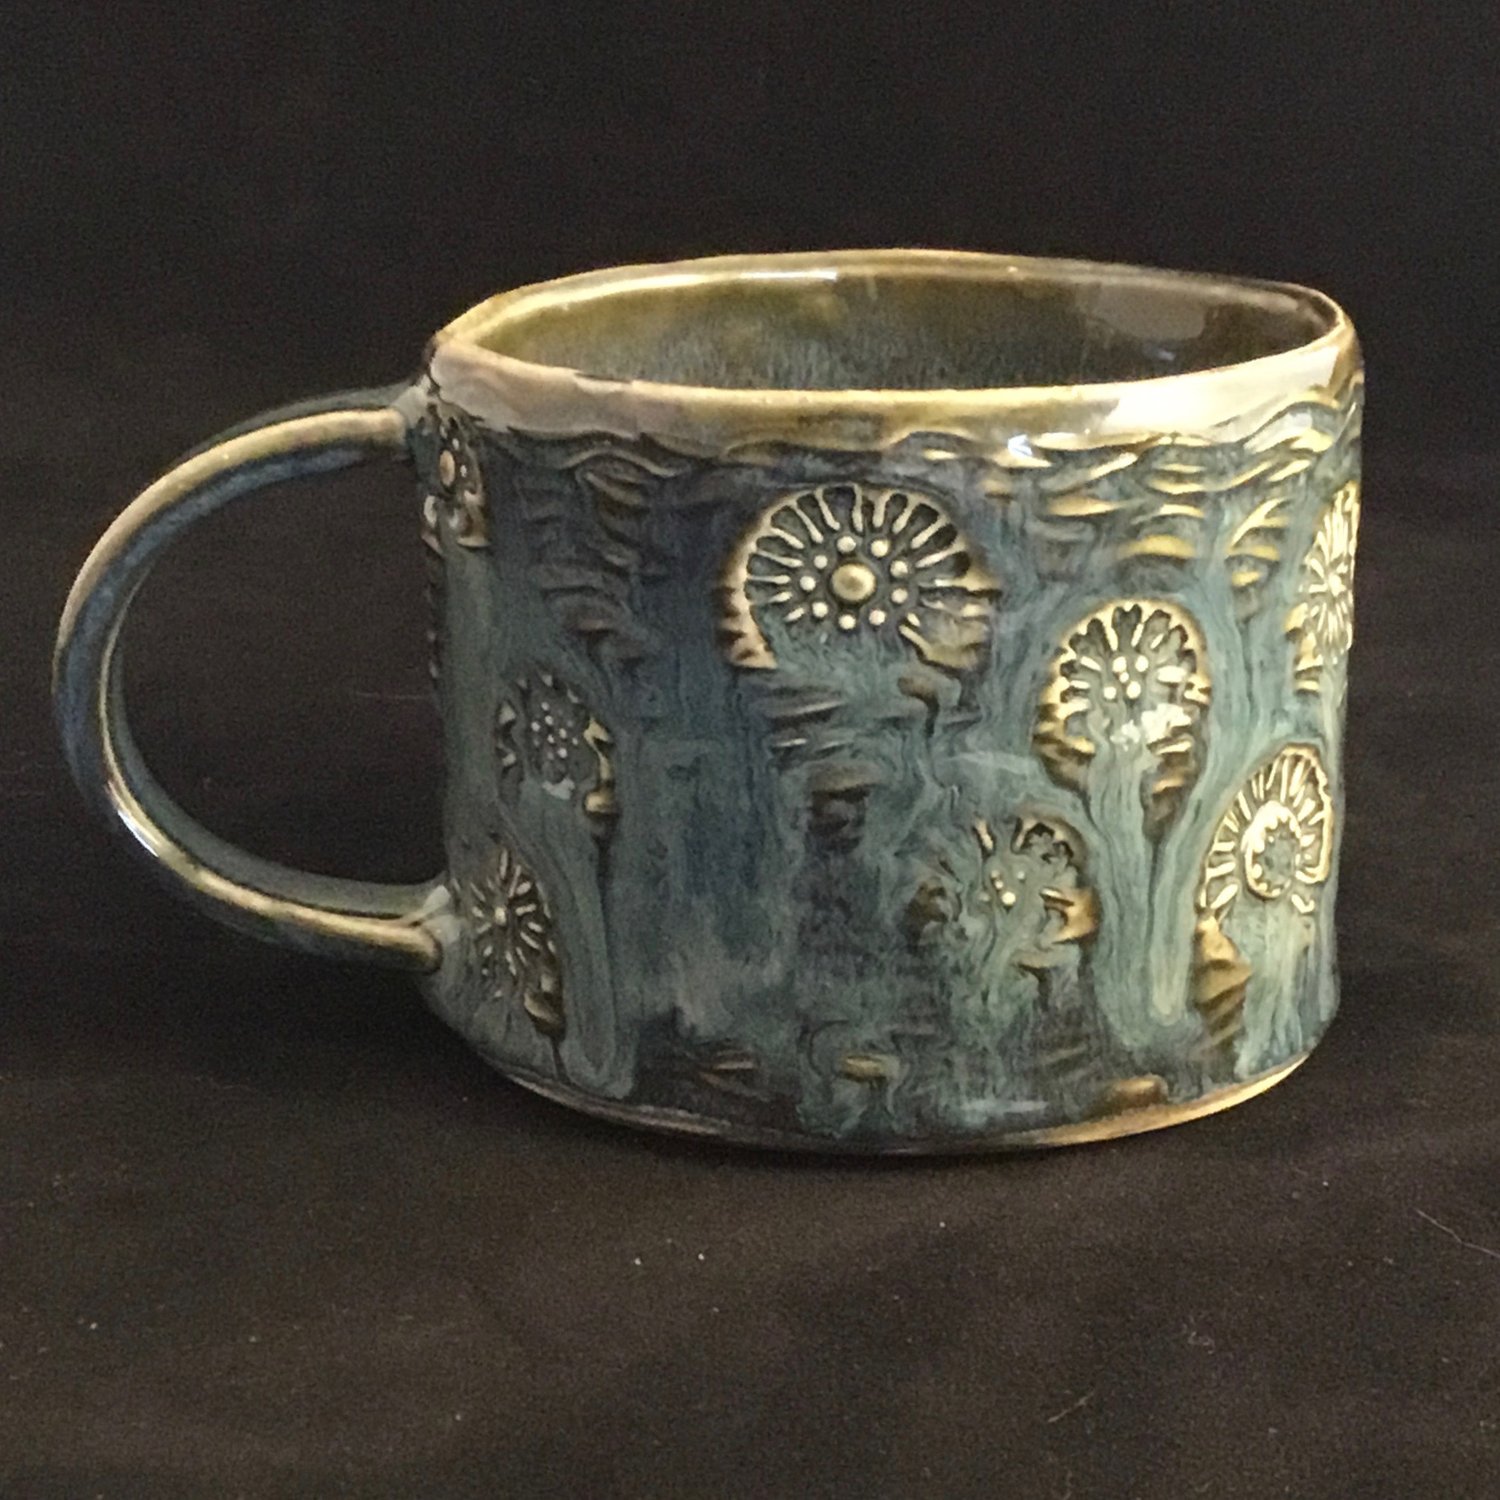 Image of River Flowers mug